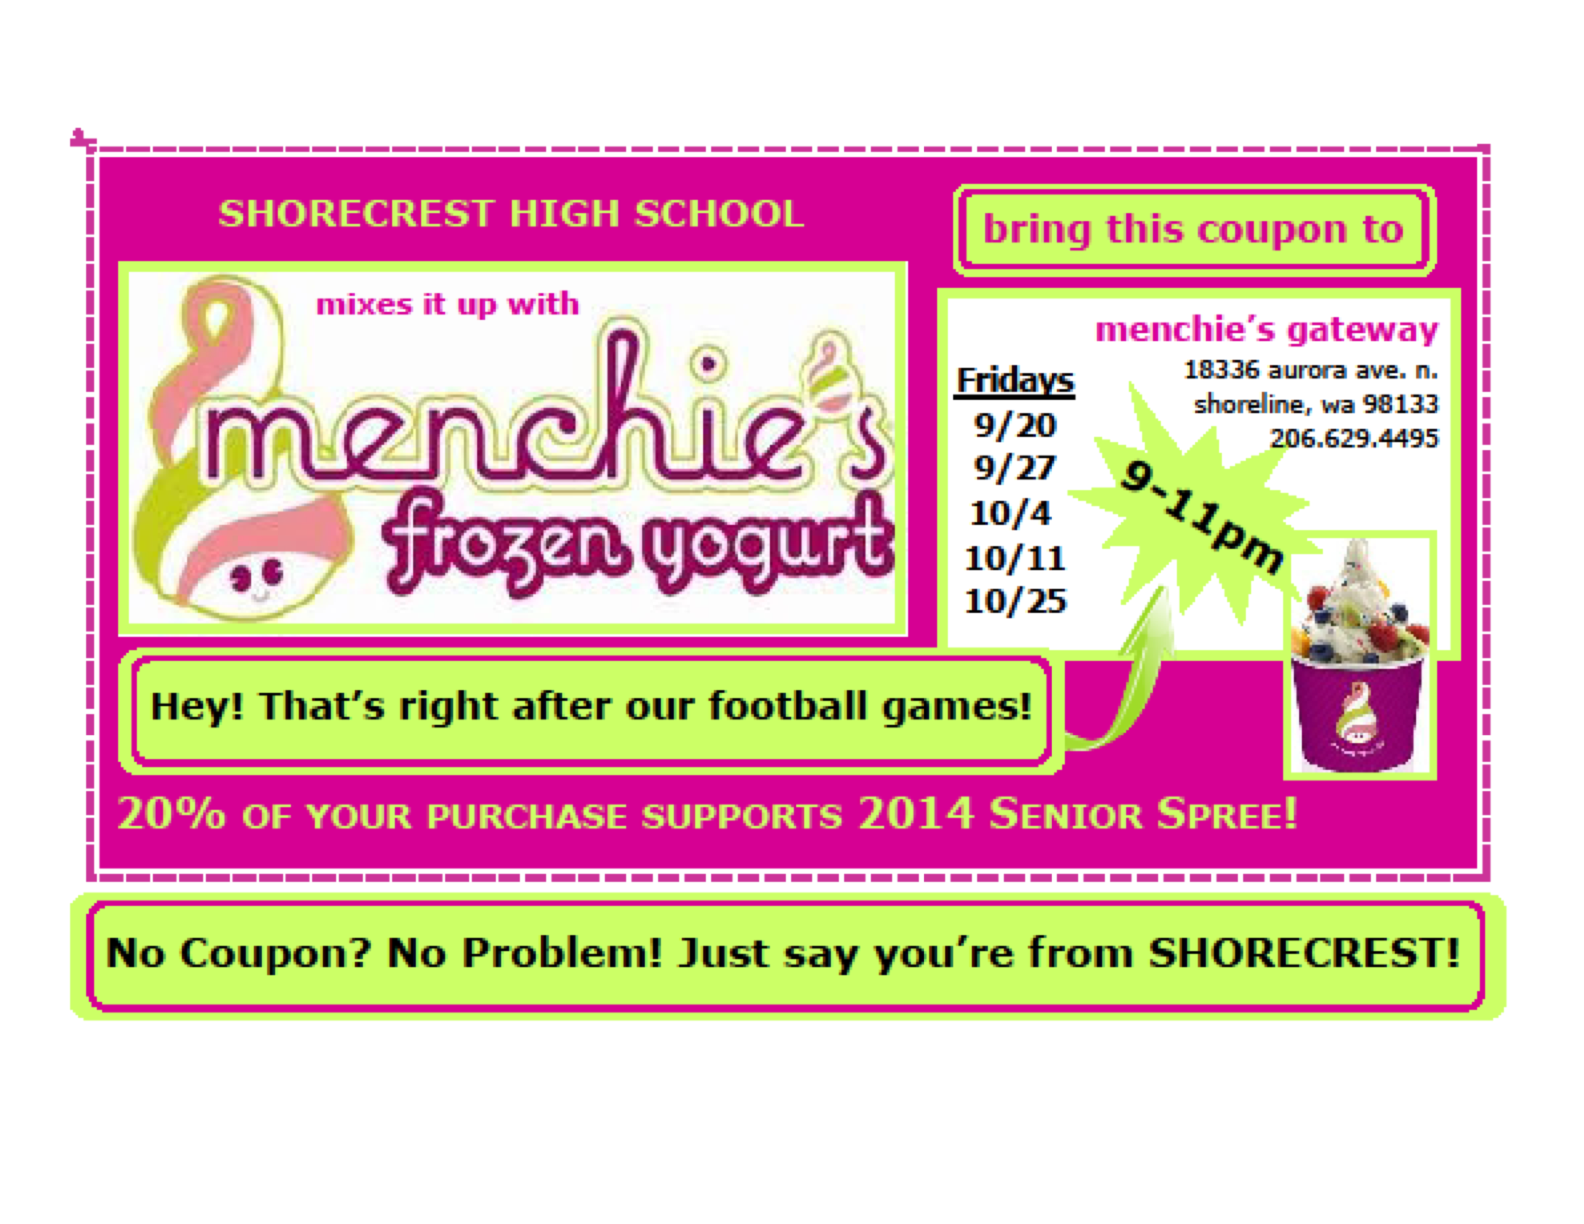 Shoreline Area News: Eat yogurt - help Shorecrest Spree